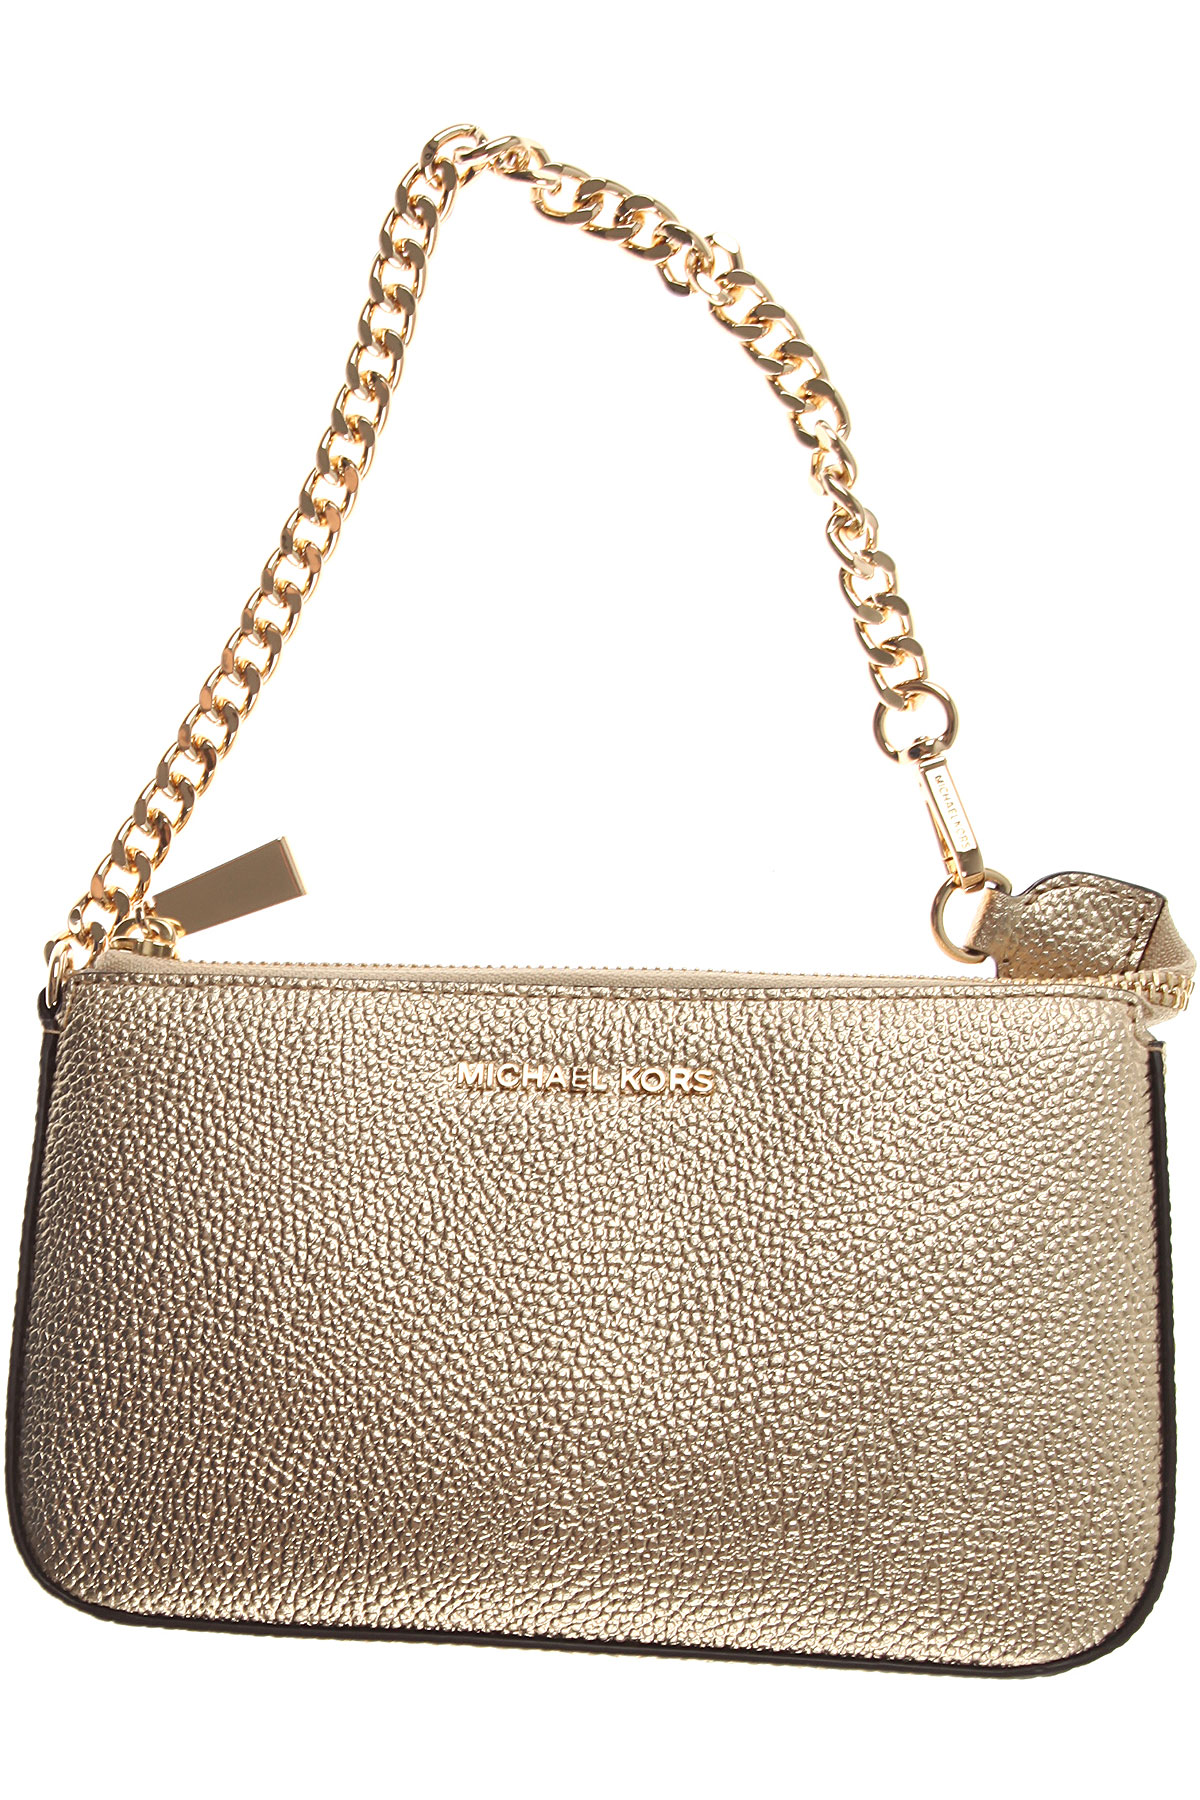 Handbags Michael Kors, Style code: 32f7mfdw6m-740-B194